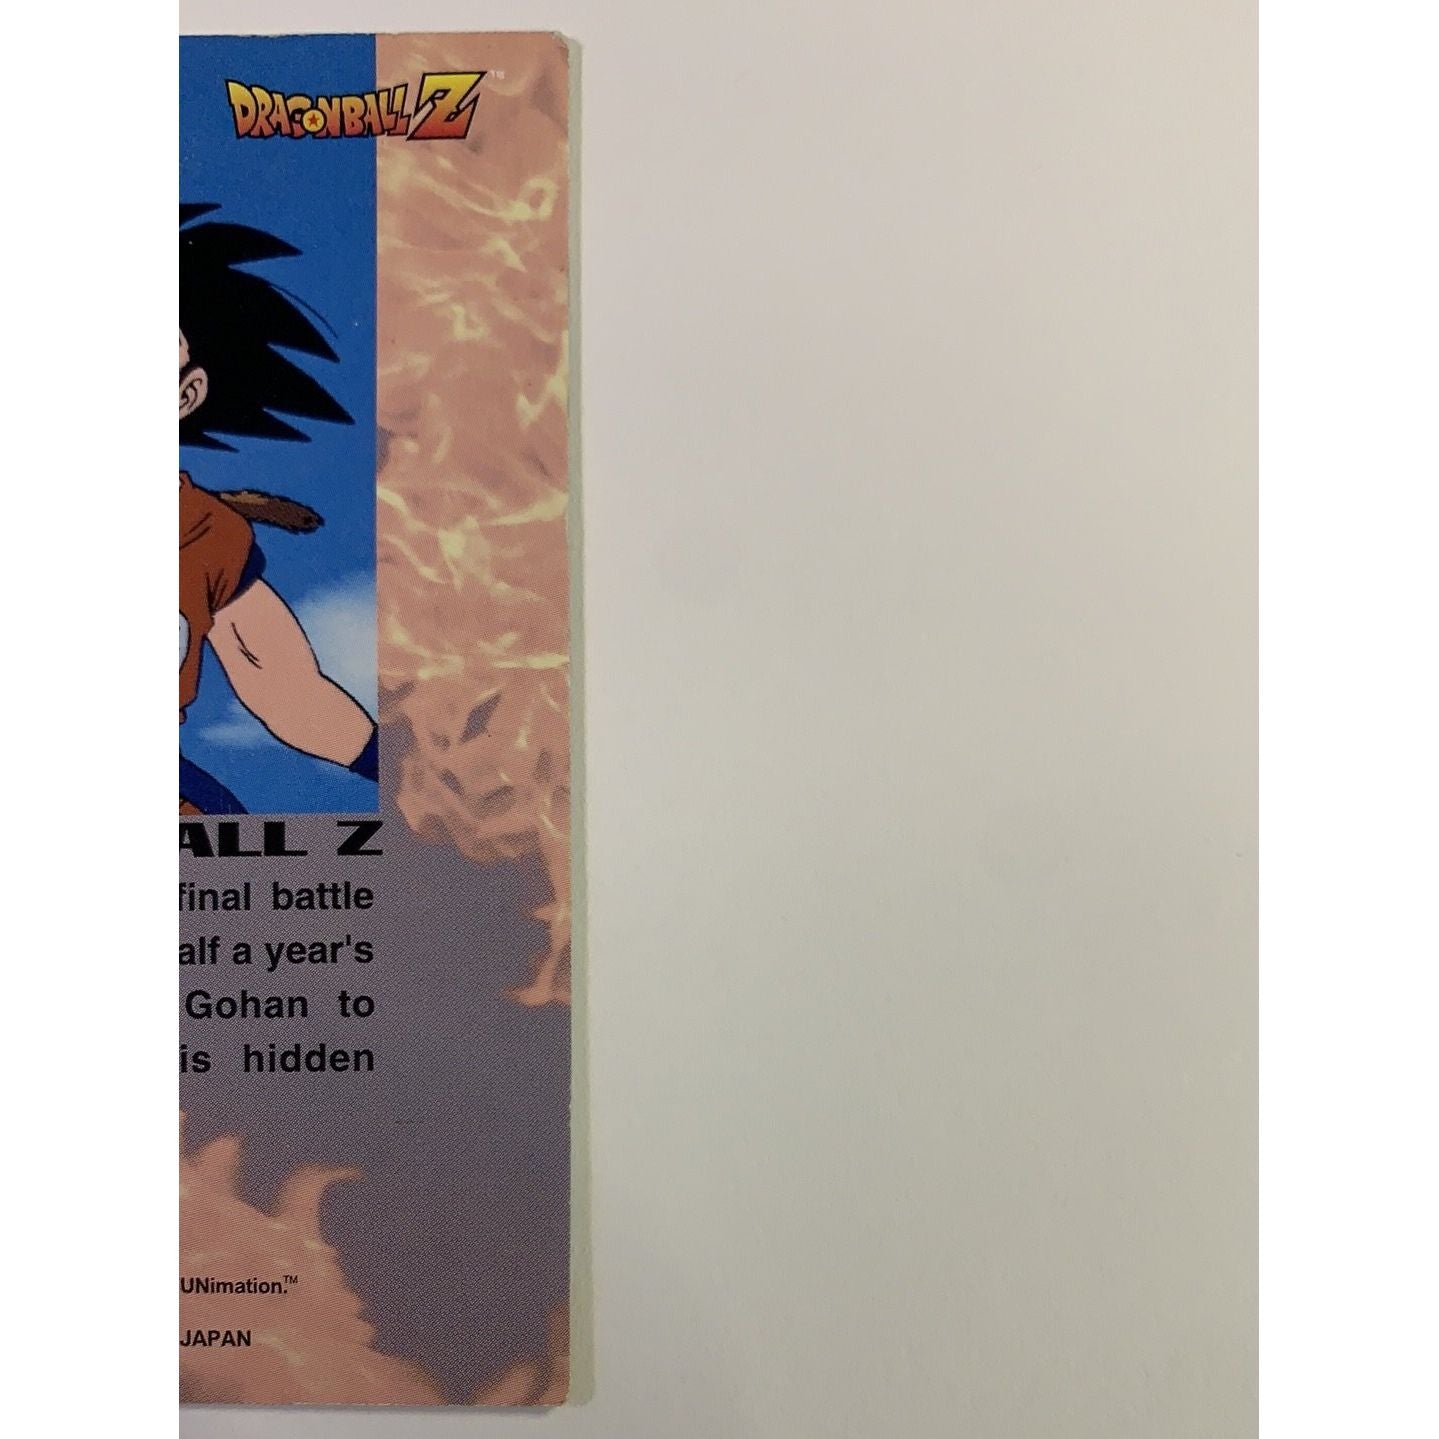  1996 JPP/ Amada Dragon Ball Z Piccolo Trains Gohan #39  Local Legends Cards & Collectibles